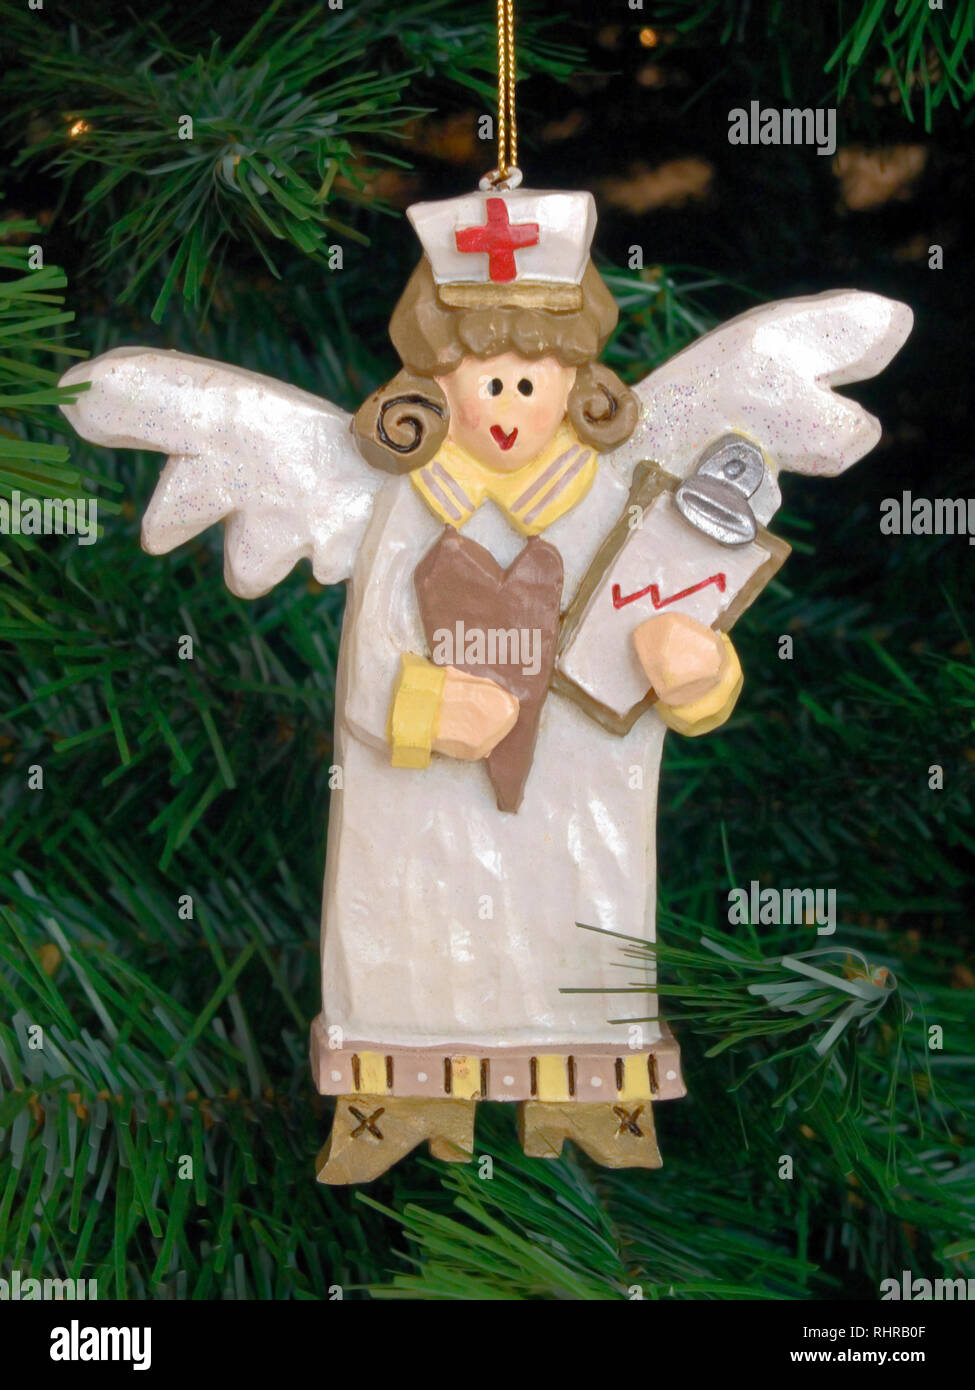 Nurse's Cap Tree Ornament